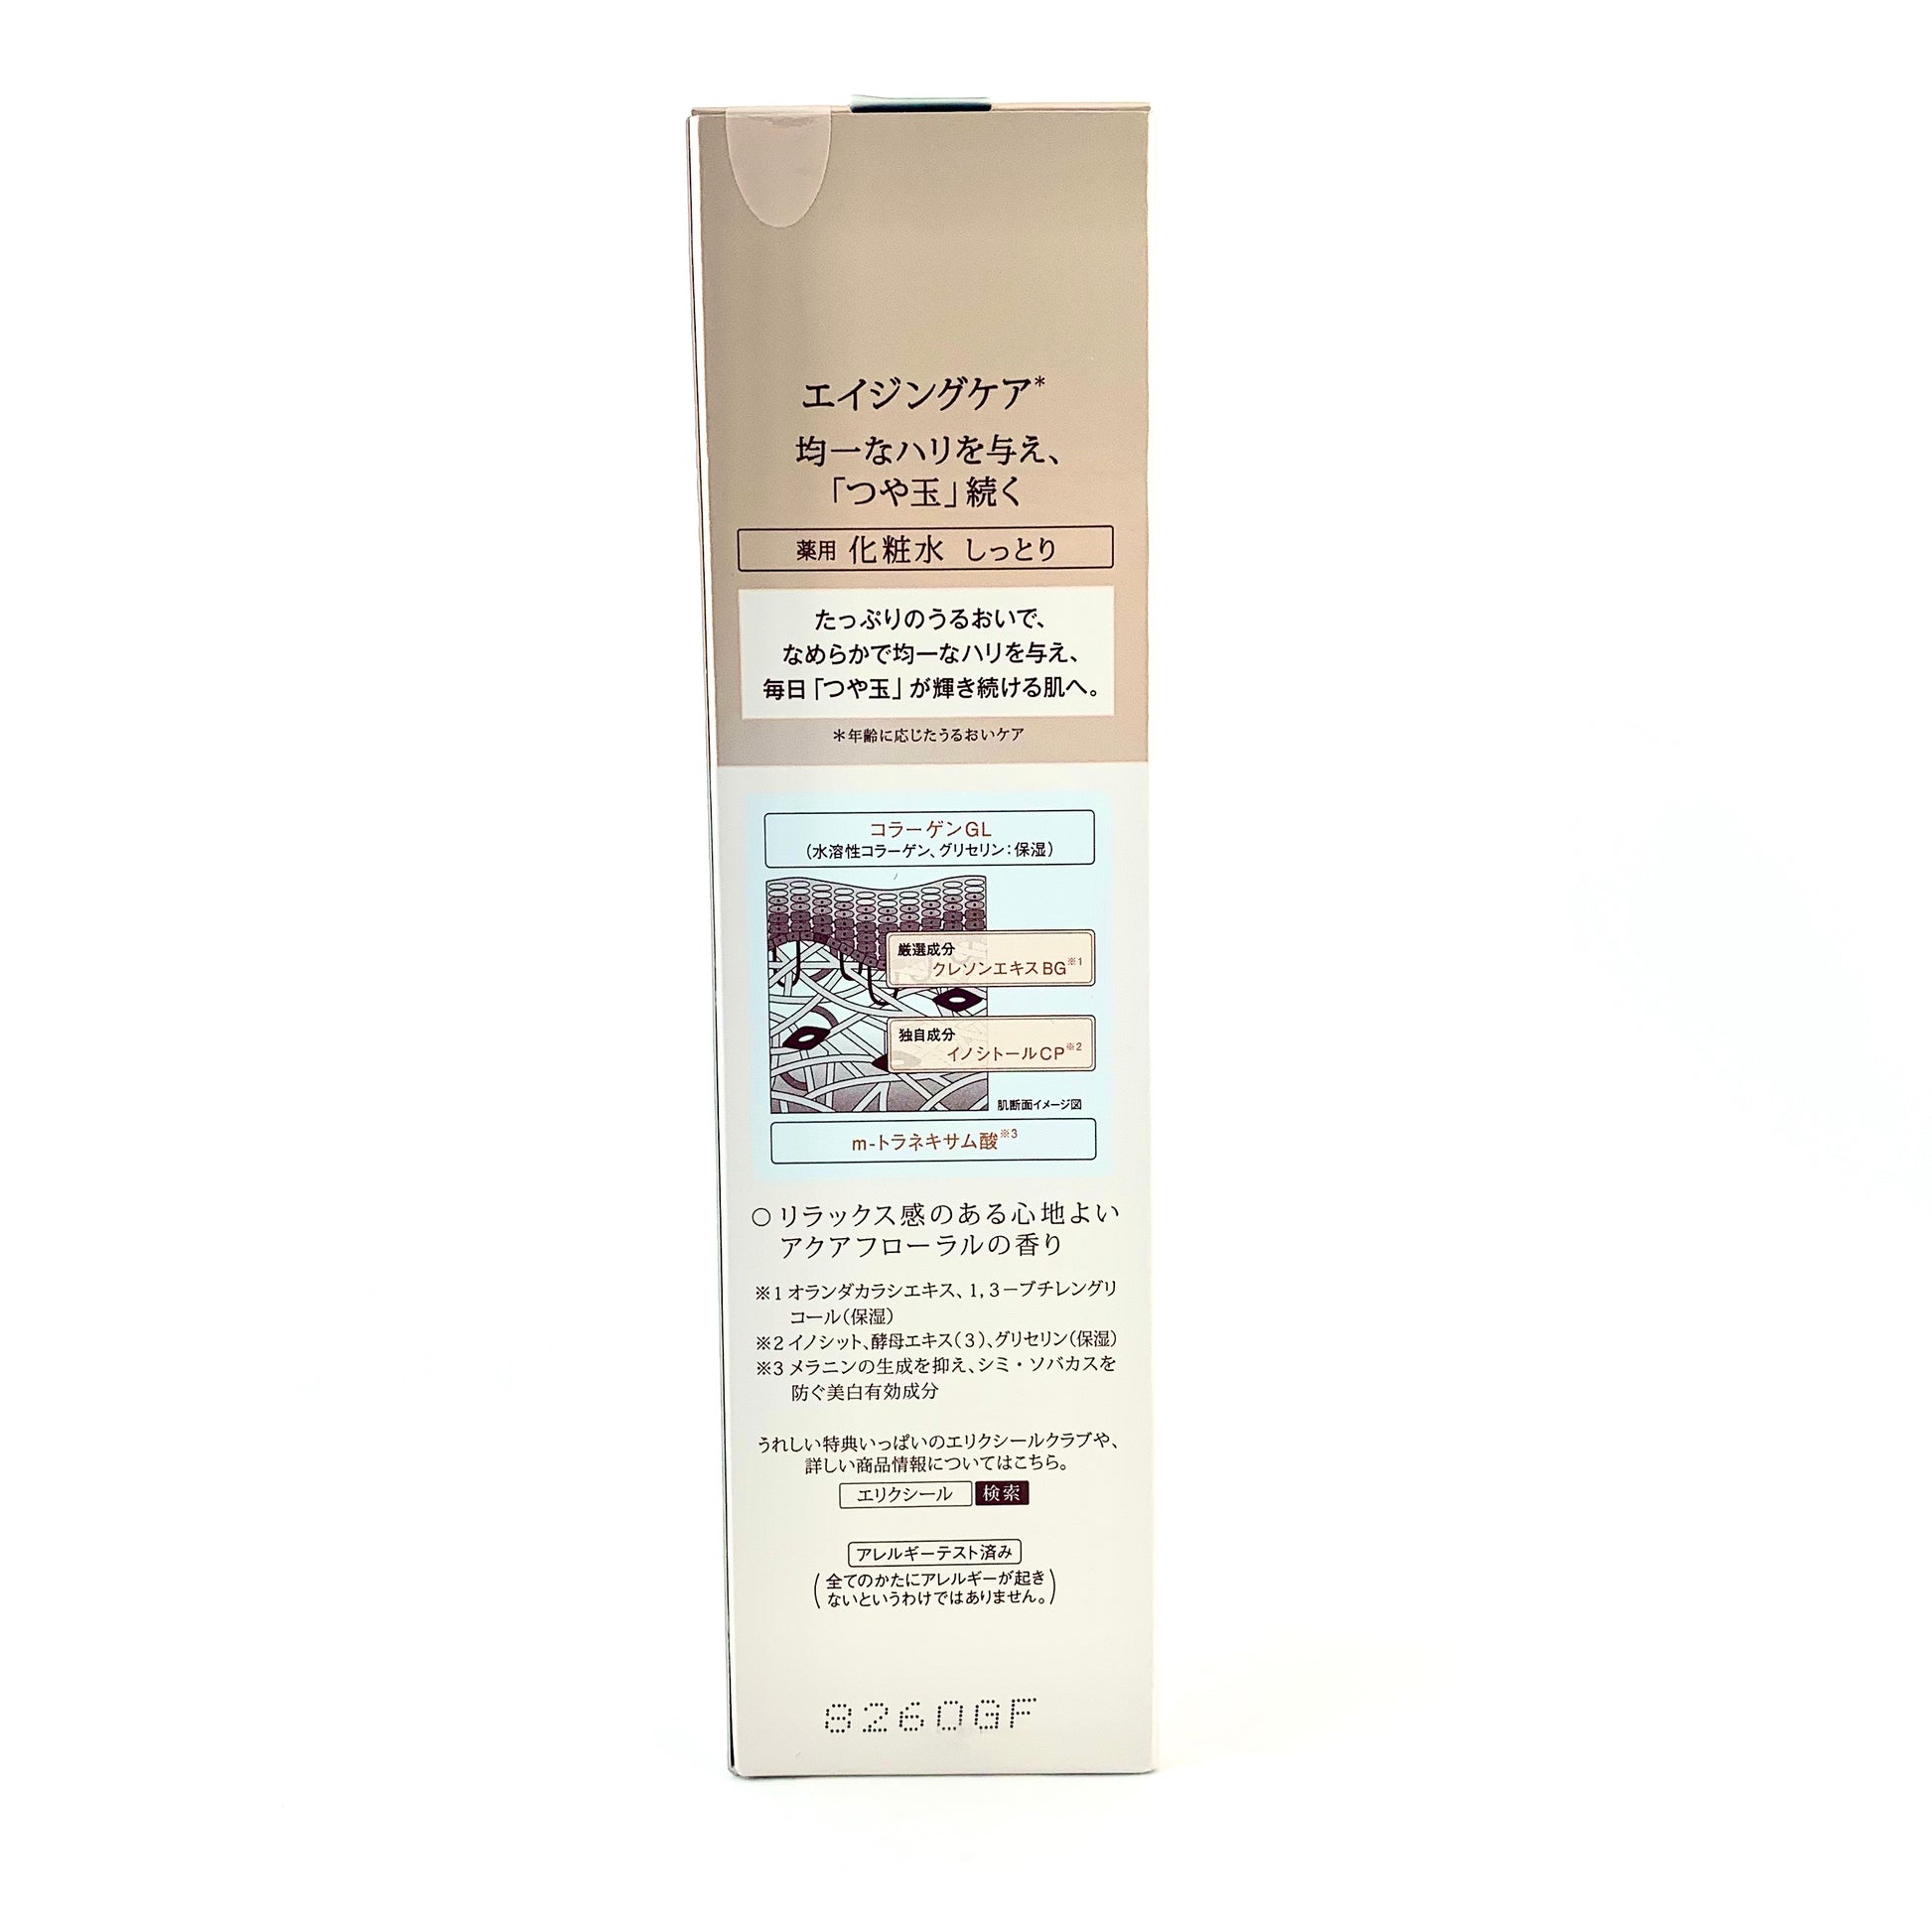 Shiseido Elixir Skin Care By Age Lifting Moisture Lotion II,toner,170ml.